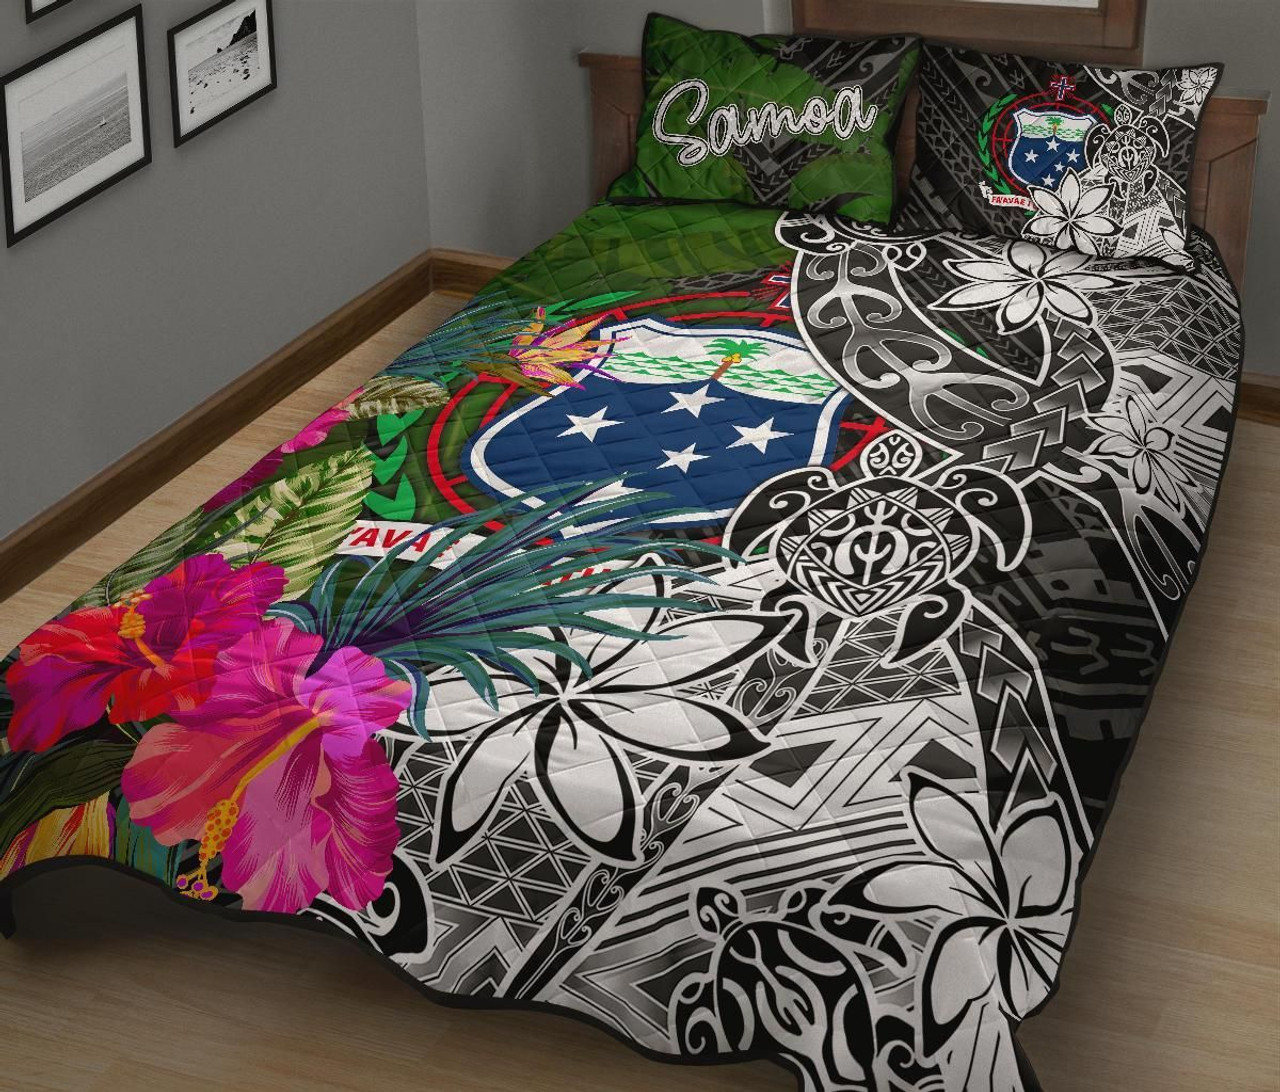 Samoa Quilt Bed Set - Turtle Plumeria Banana Leaf 2